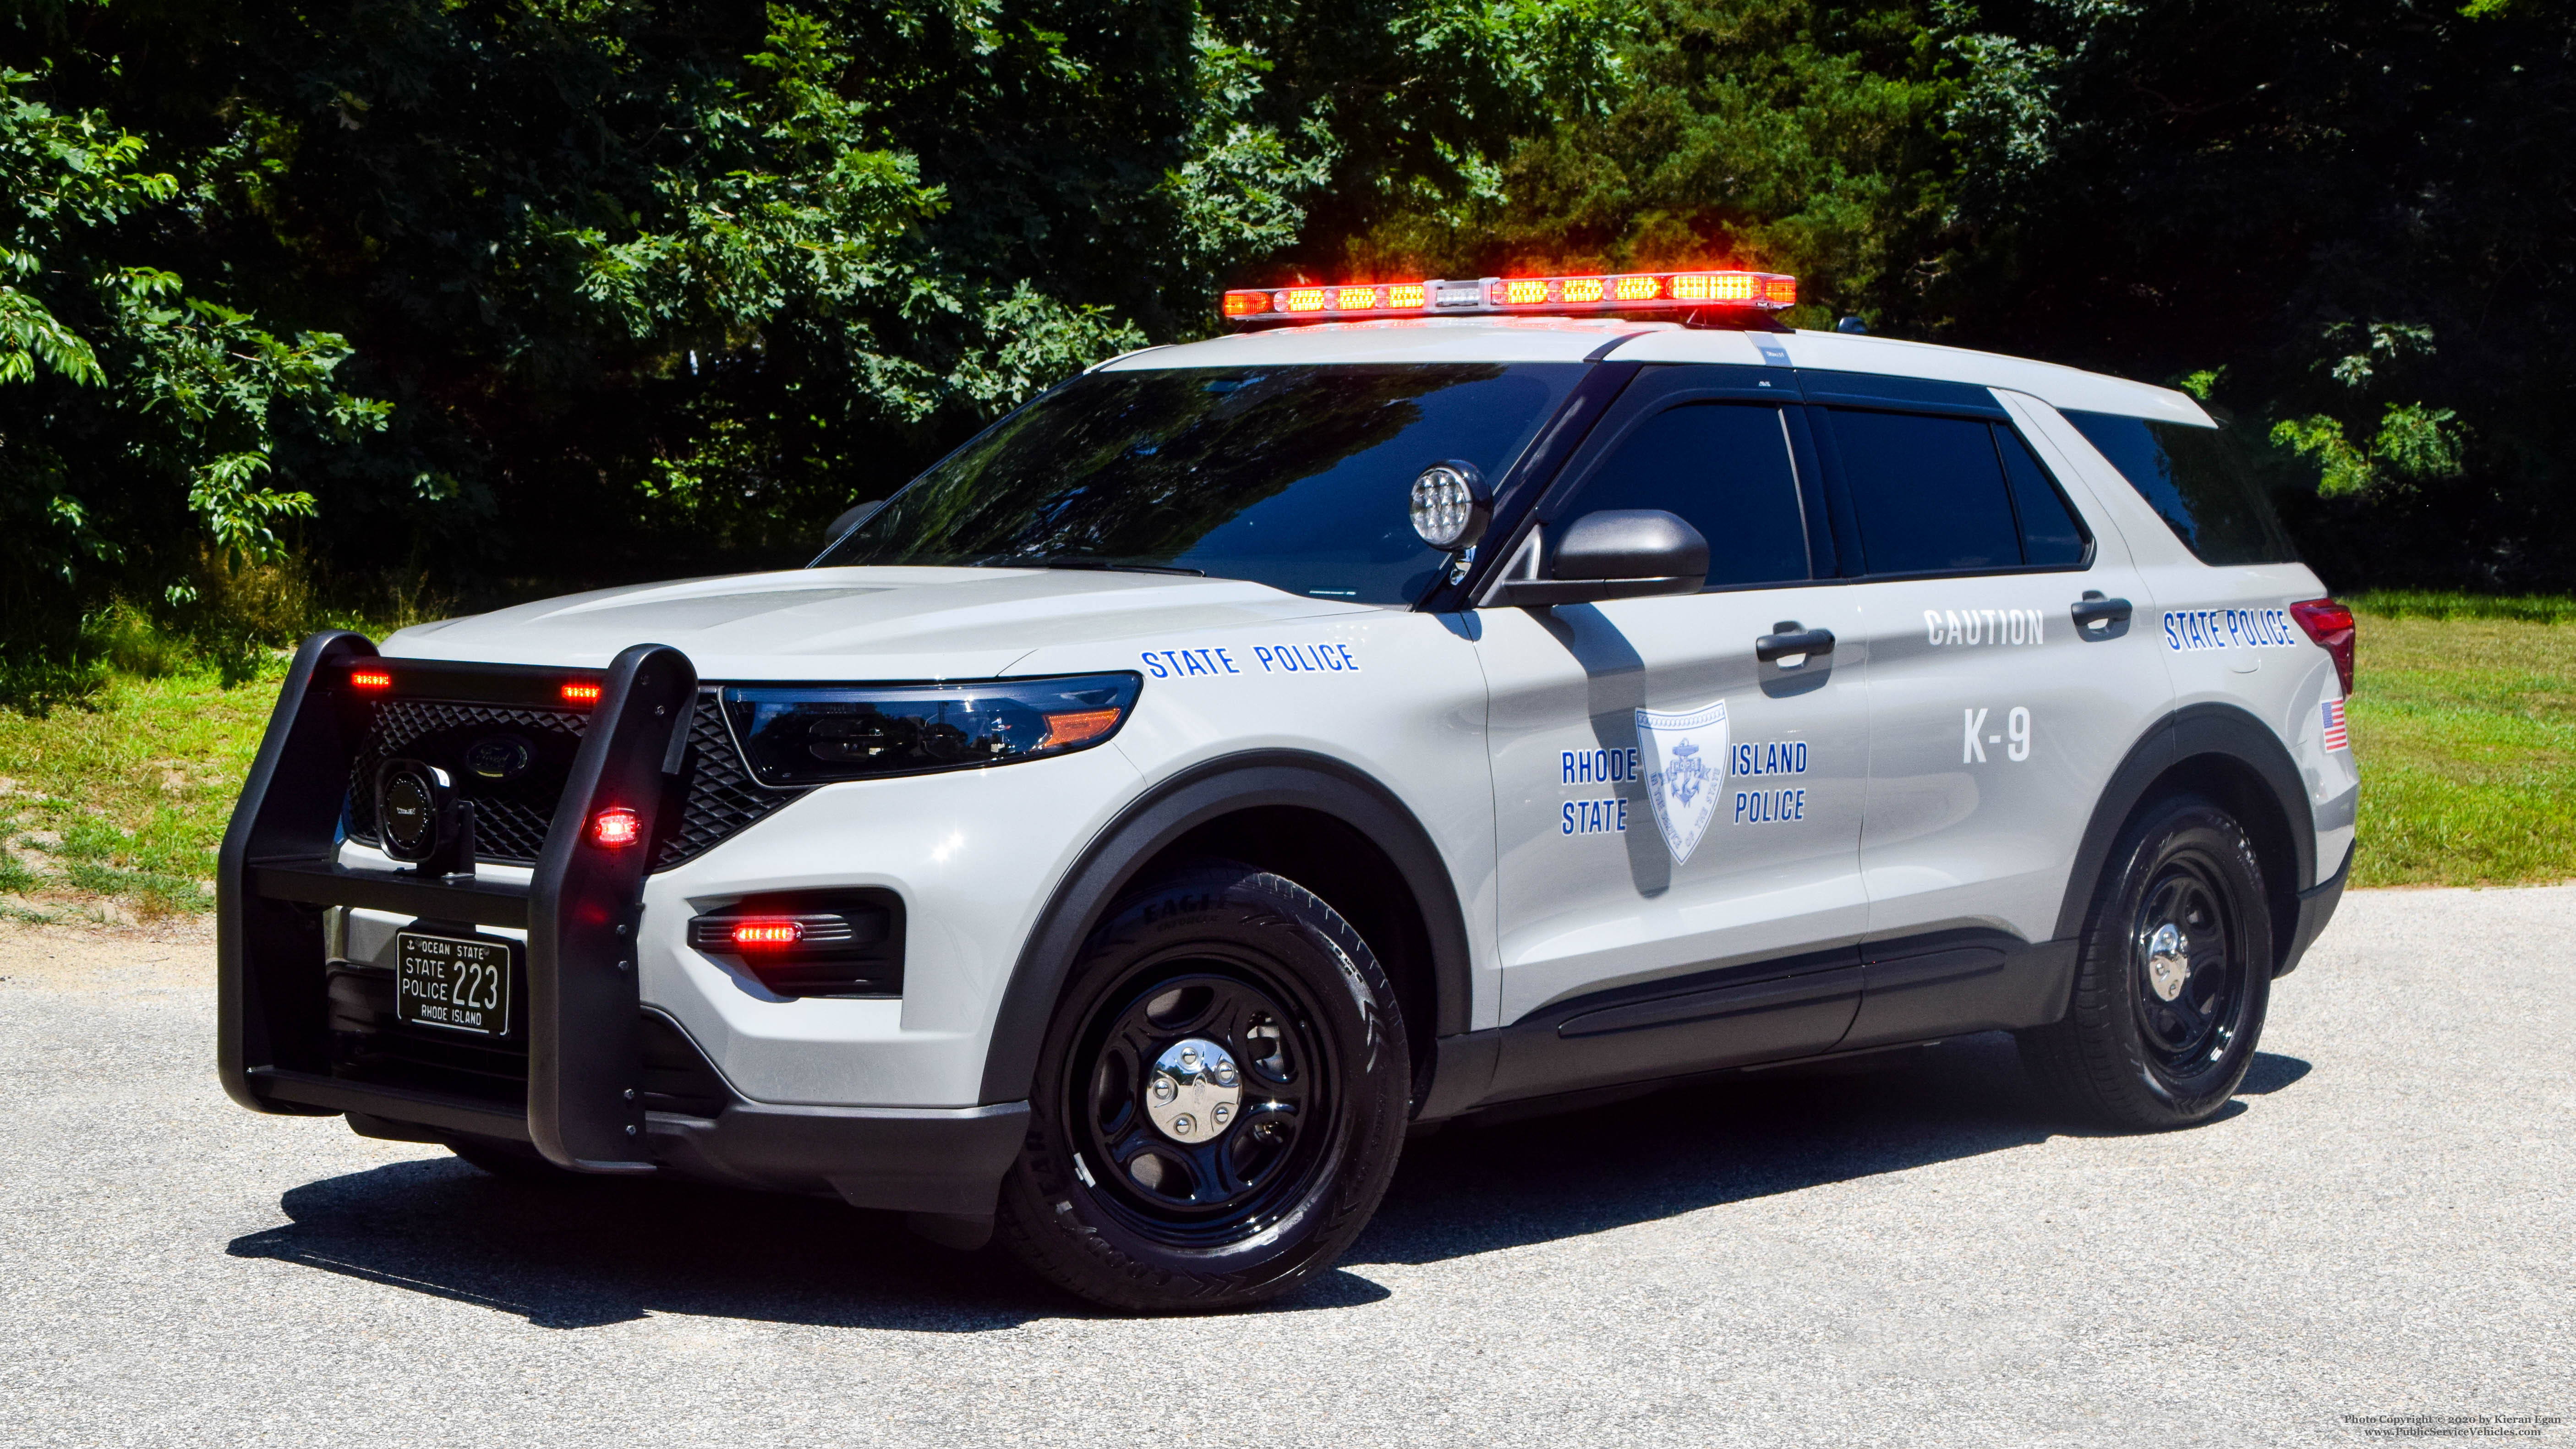 A photo  of Rhode Island State Police
            Cruiser 223, a 2020 Ford Police Interceptor Utility             taken by Kieran Egan